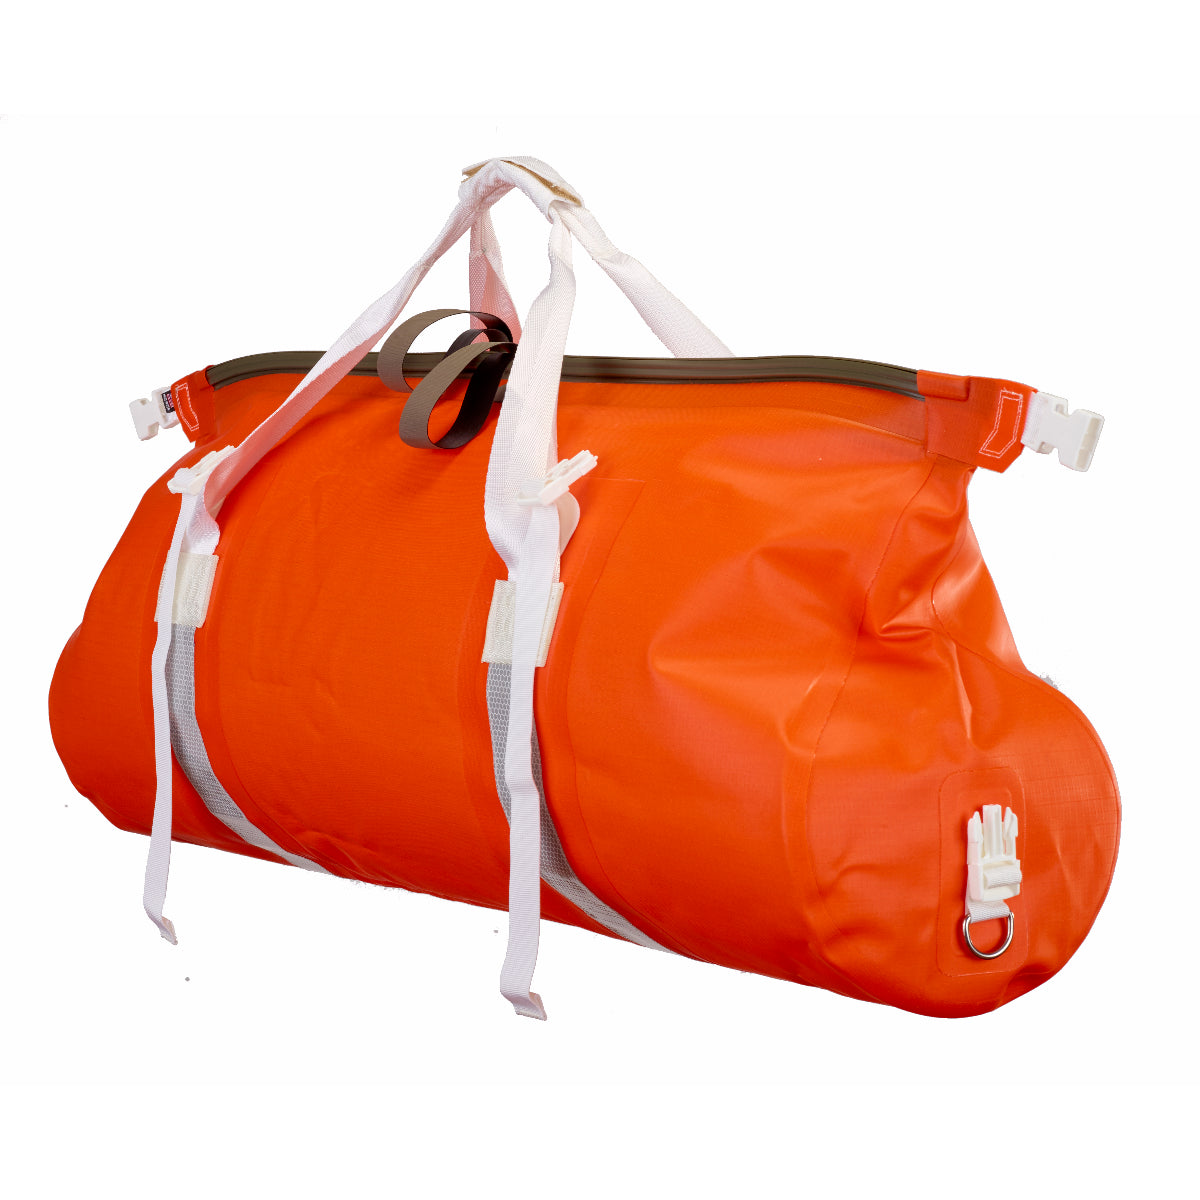 Watershed Survival Equipment Bag, LG, LP Relief Valve